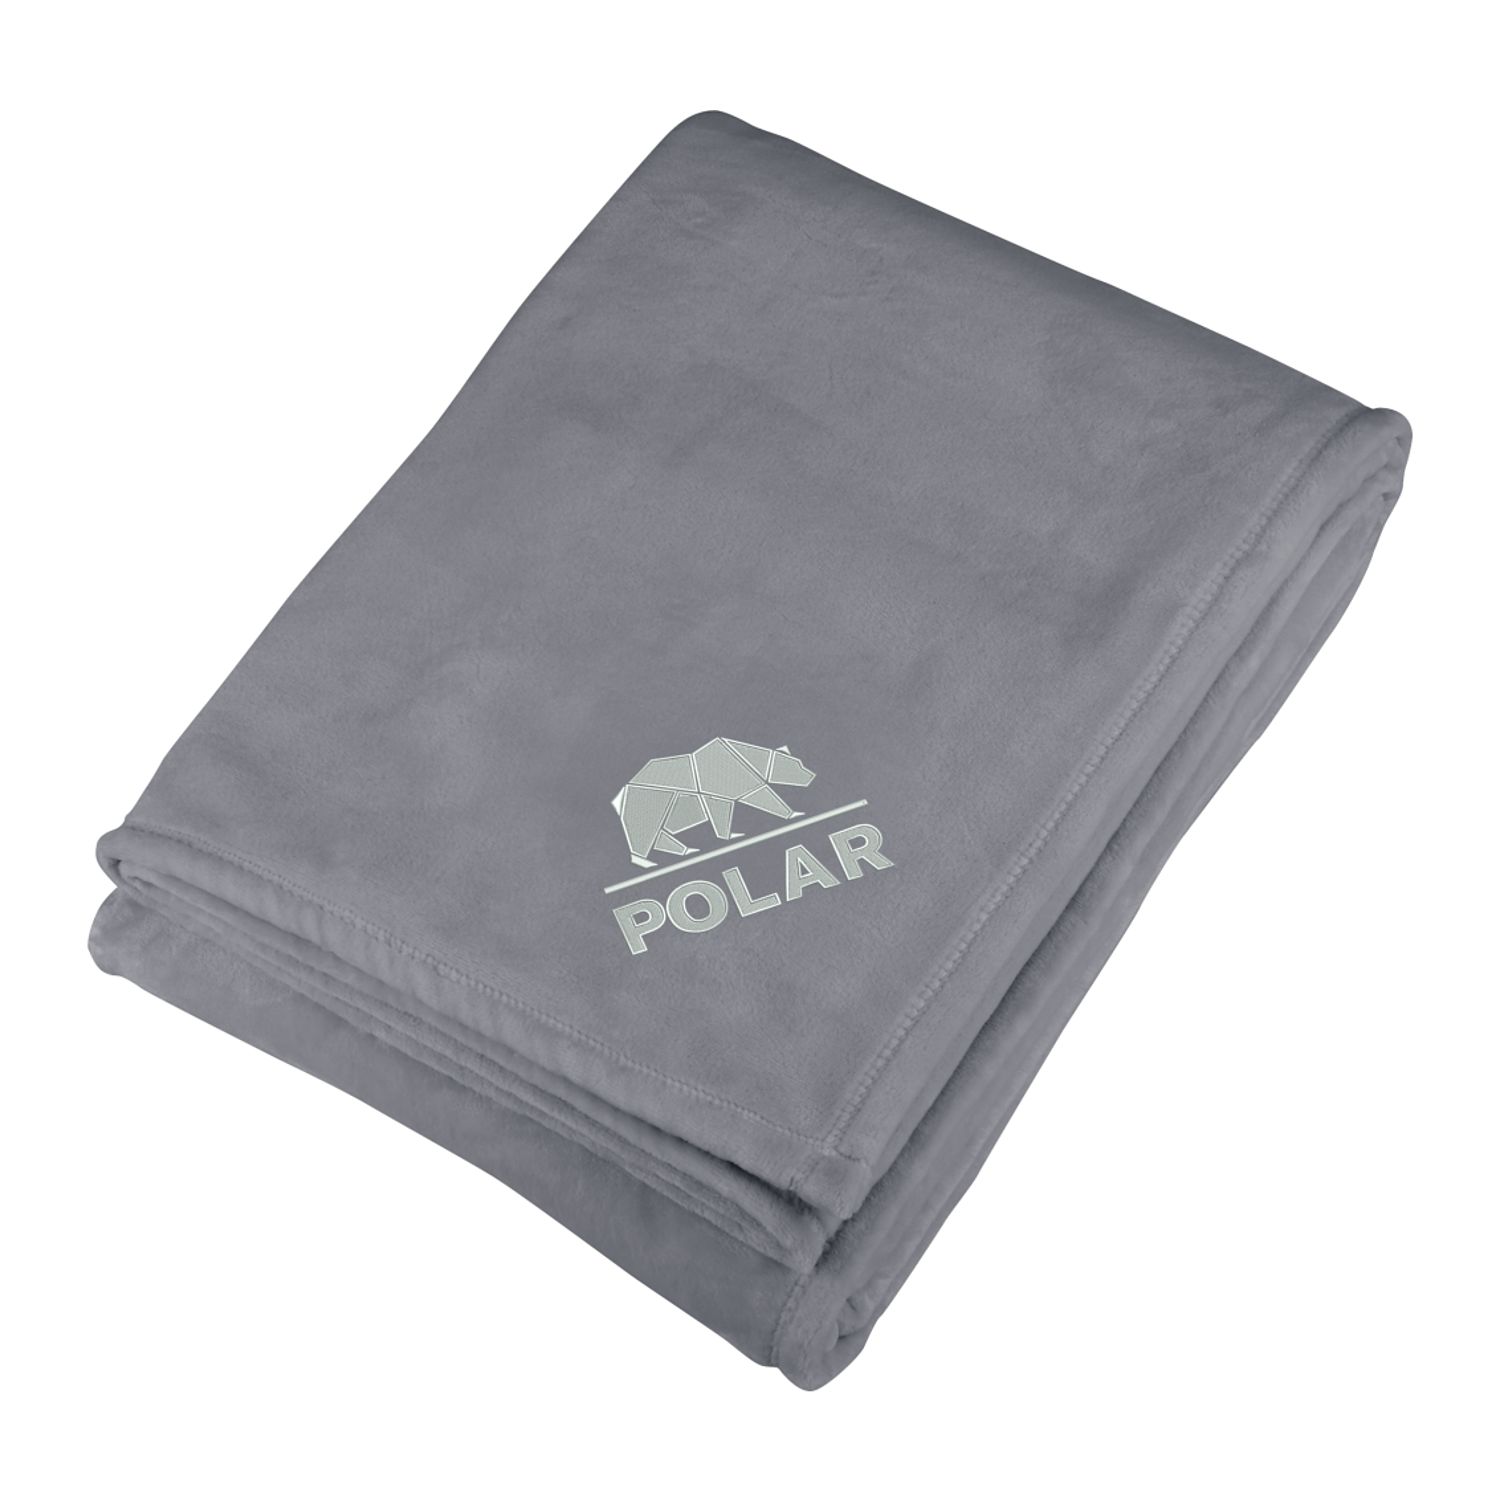 Oversized Ultra Plush Throw Blanket